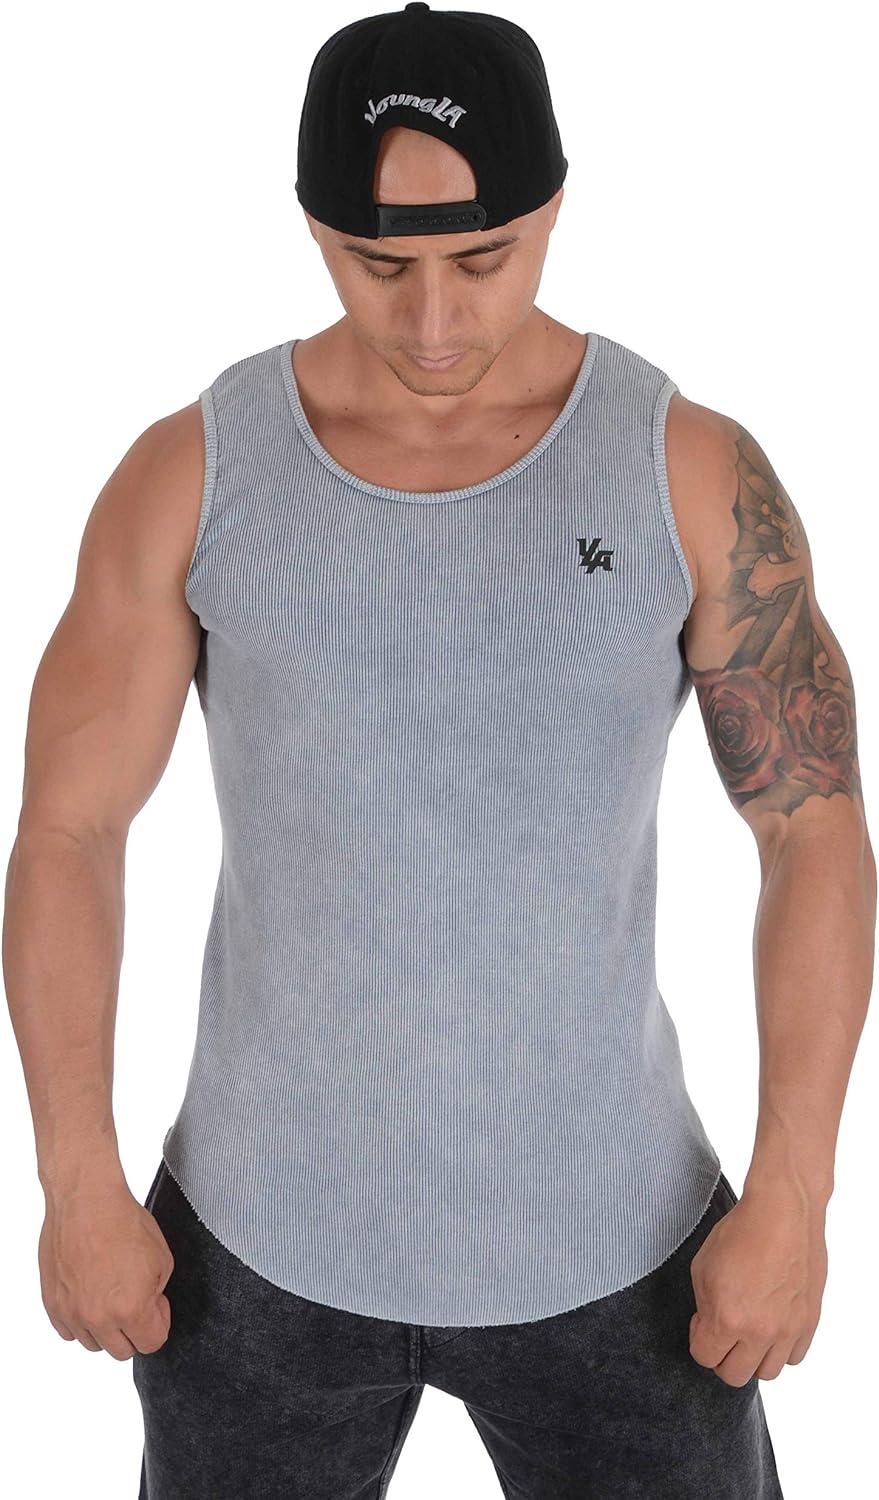  YoungLA Tank Tops Men Workout Muscle Shirts Gym Bodybuilding  314 Bur S Burgundy : Sports & Outdoors